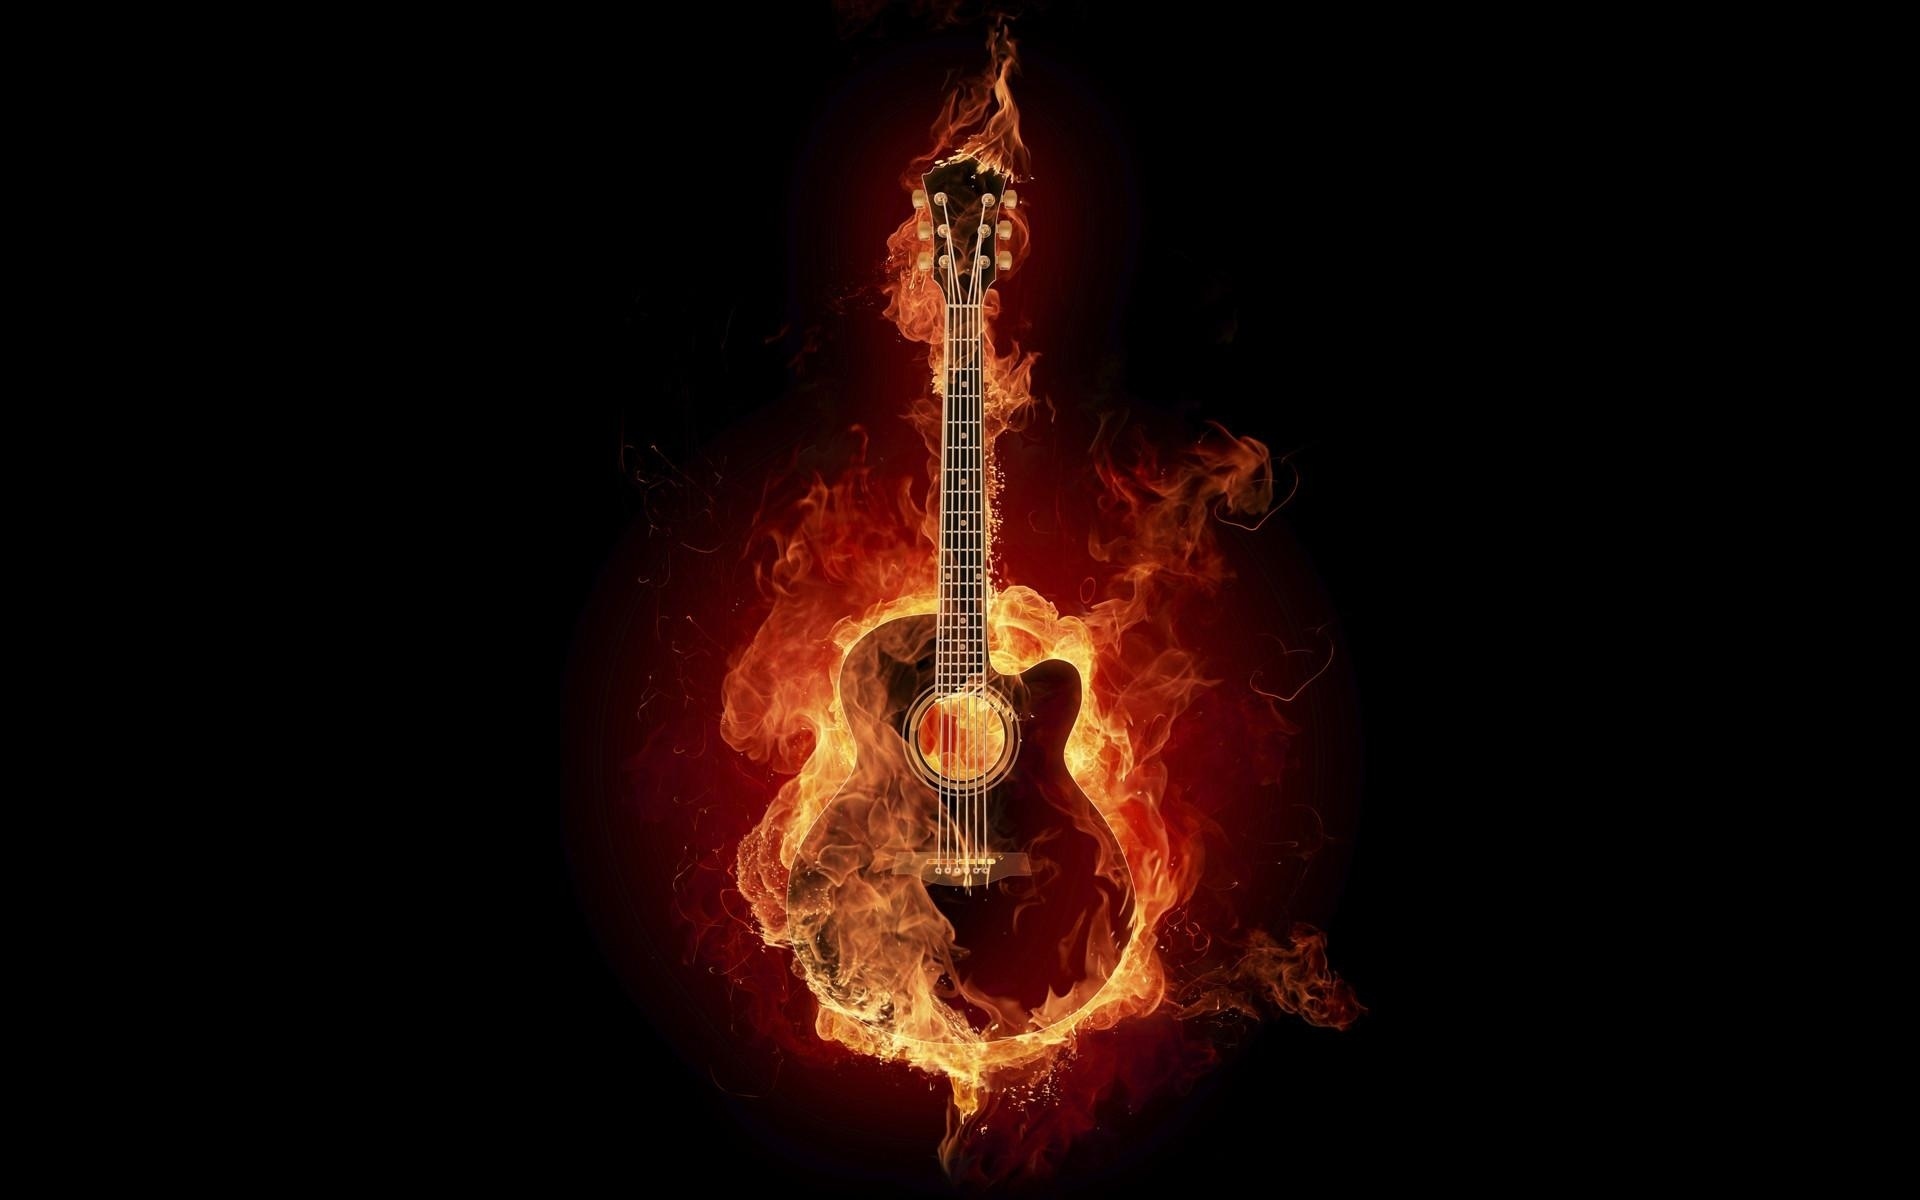 Guitar On Fire Full HD Desktop Wallpaper 1080p